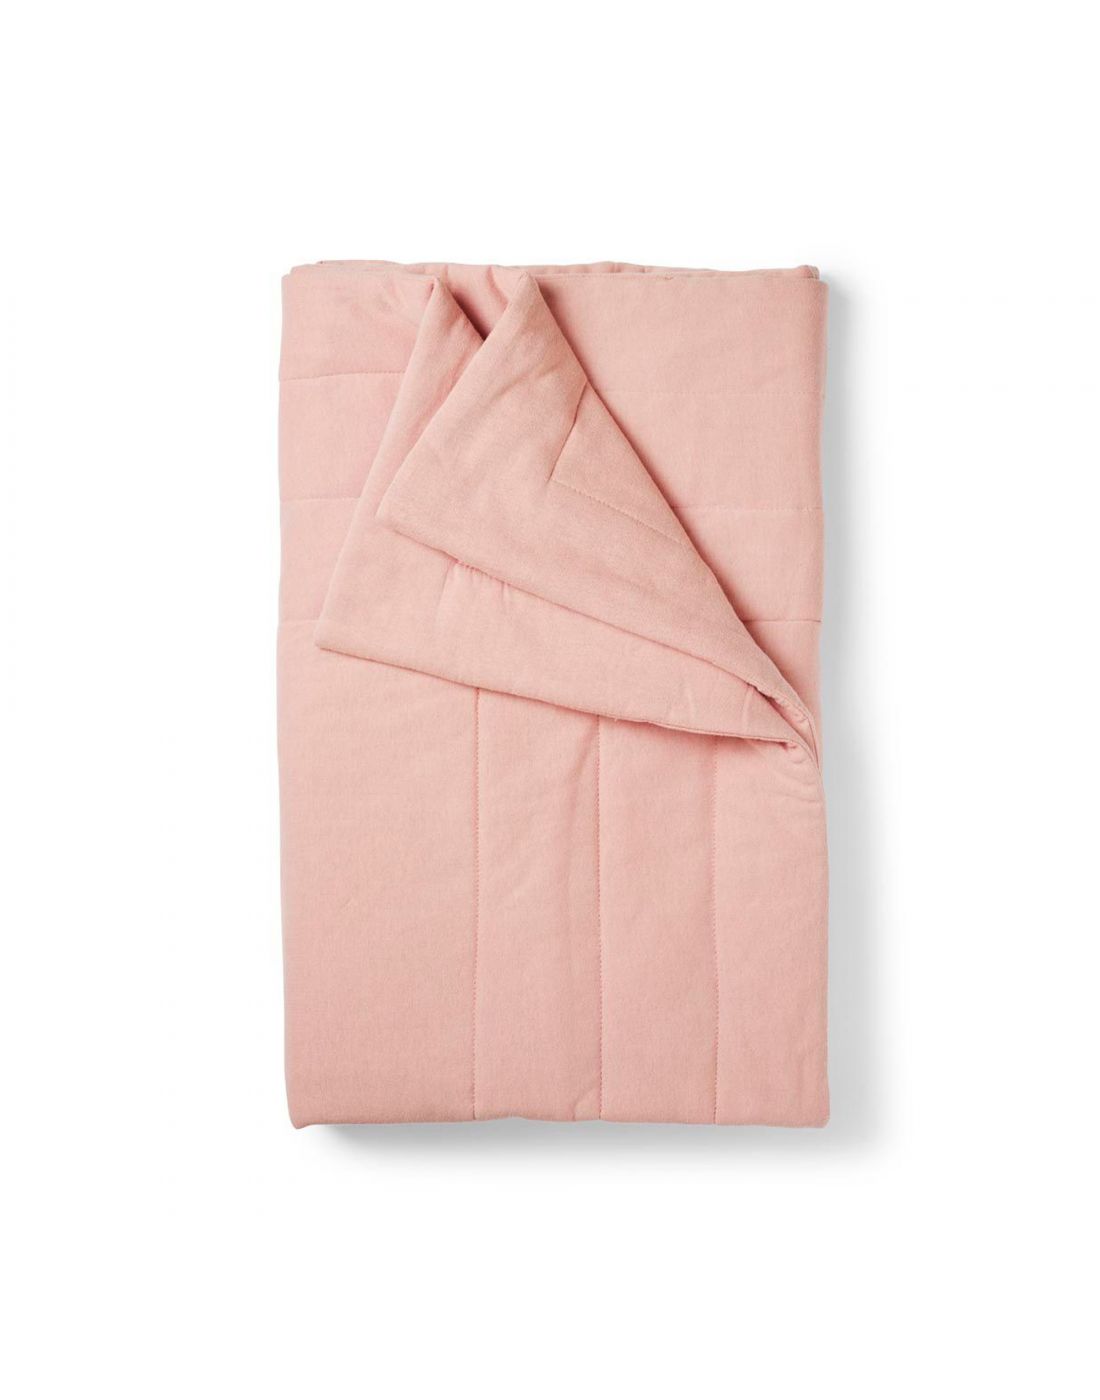 Elodie Quilted Blanket Blushing Pink
